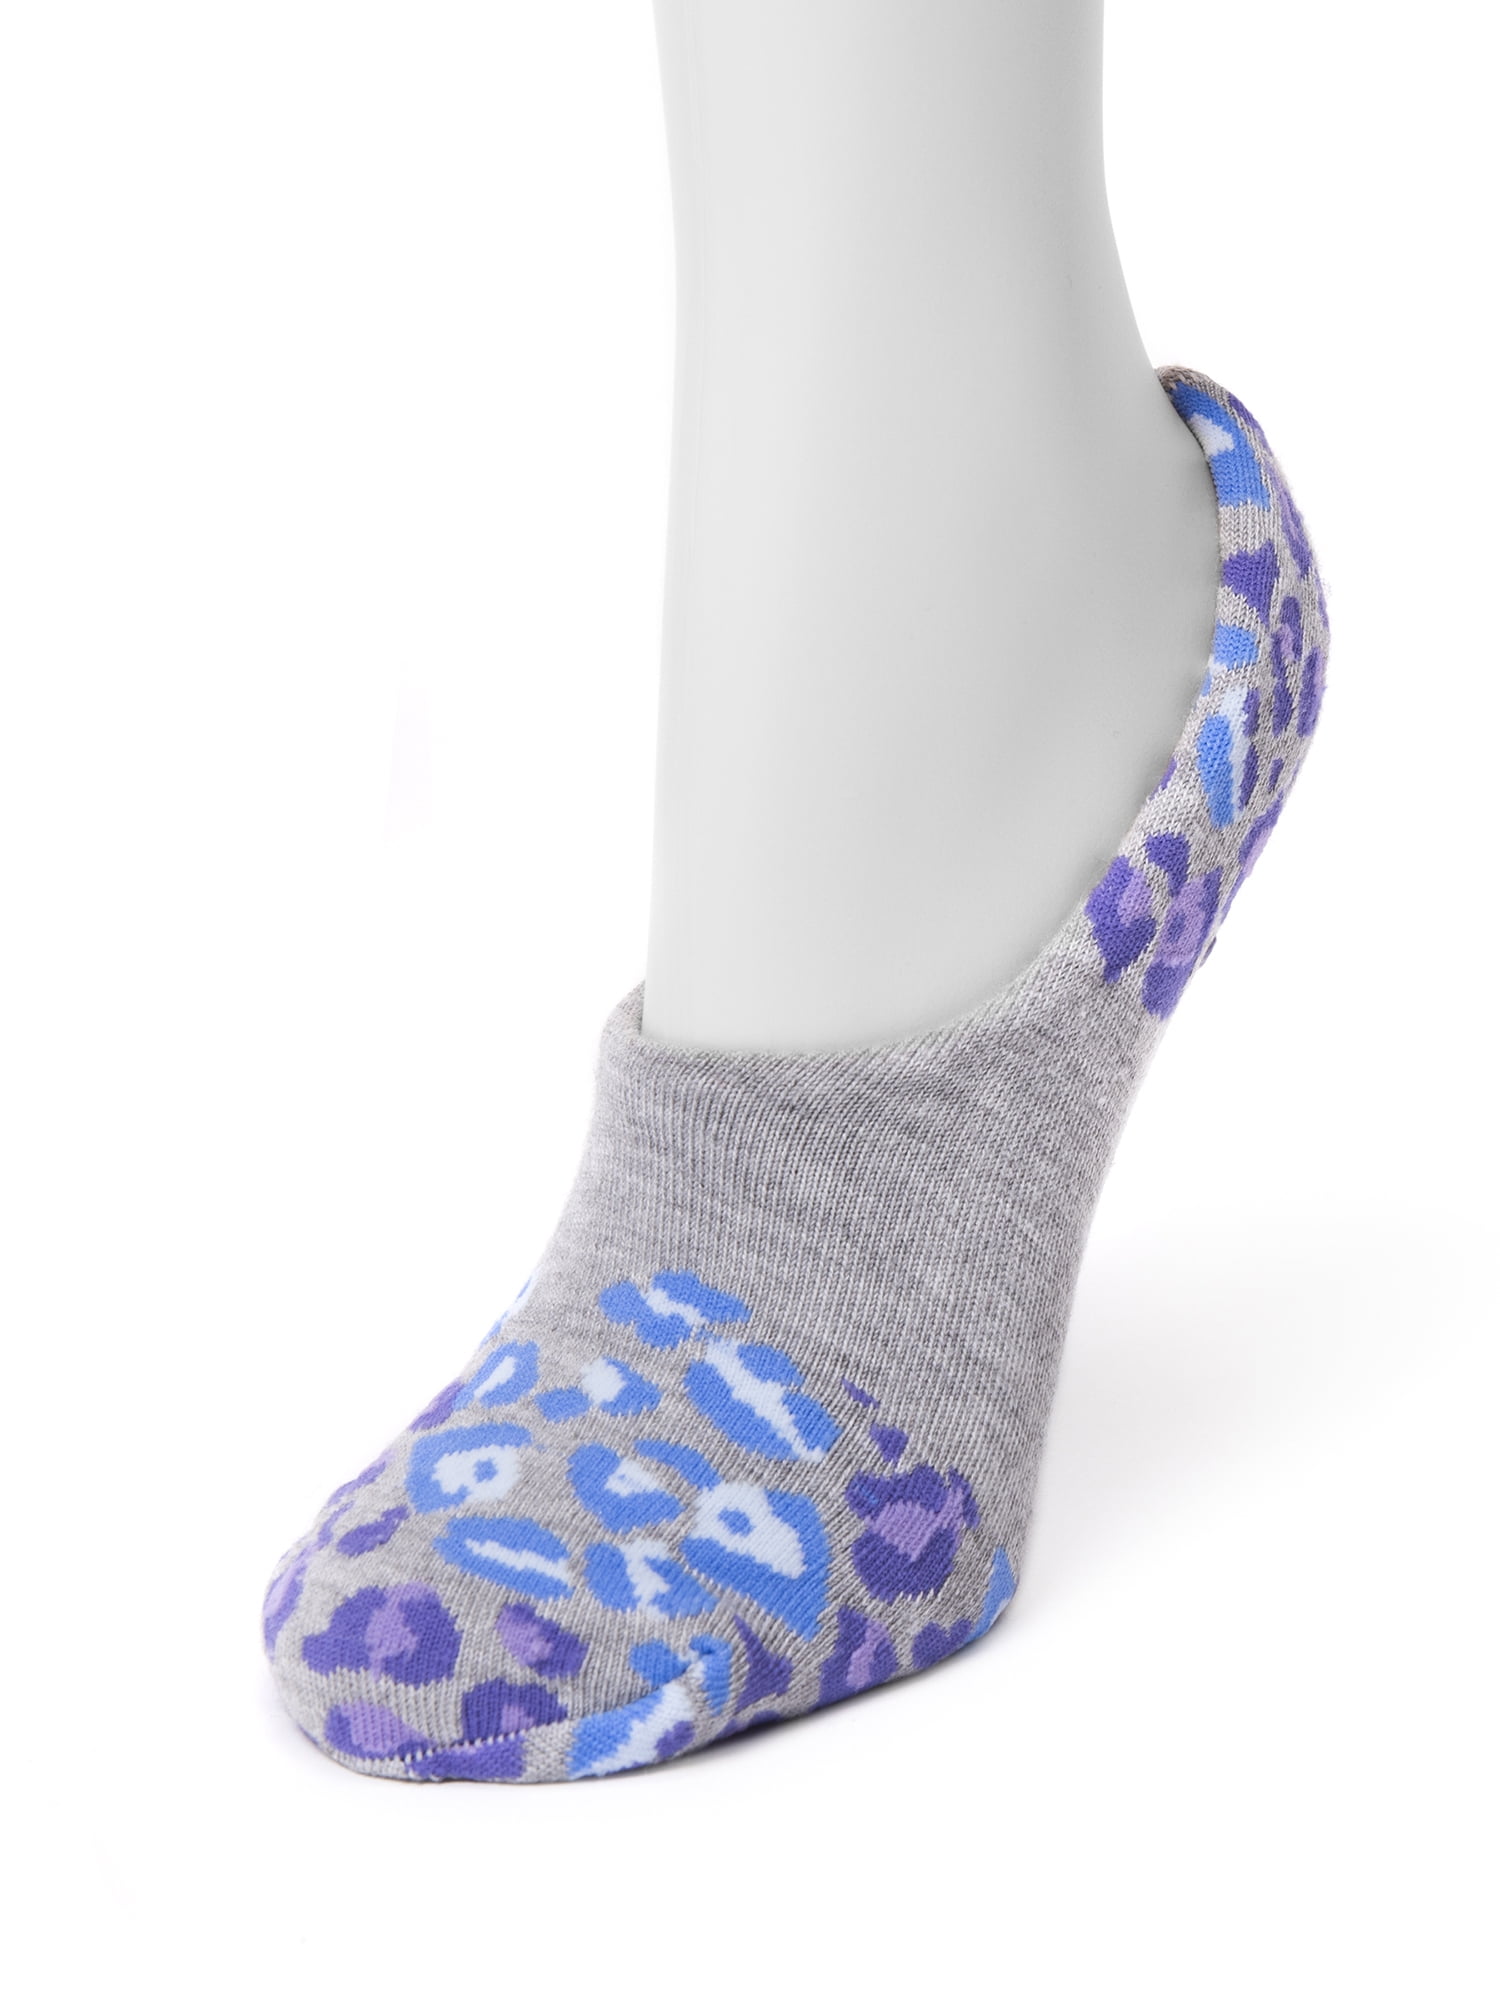 Ballerina Slipper Socks - Walmart.com 